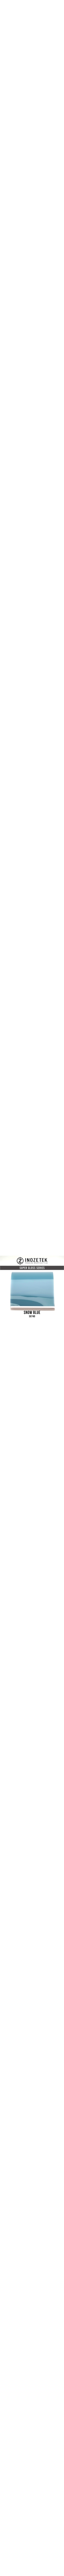 SG740 INOZETEK SUPER GLOSS SNOW BLUE en 1.52m